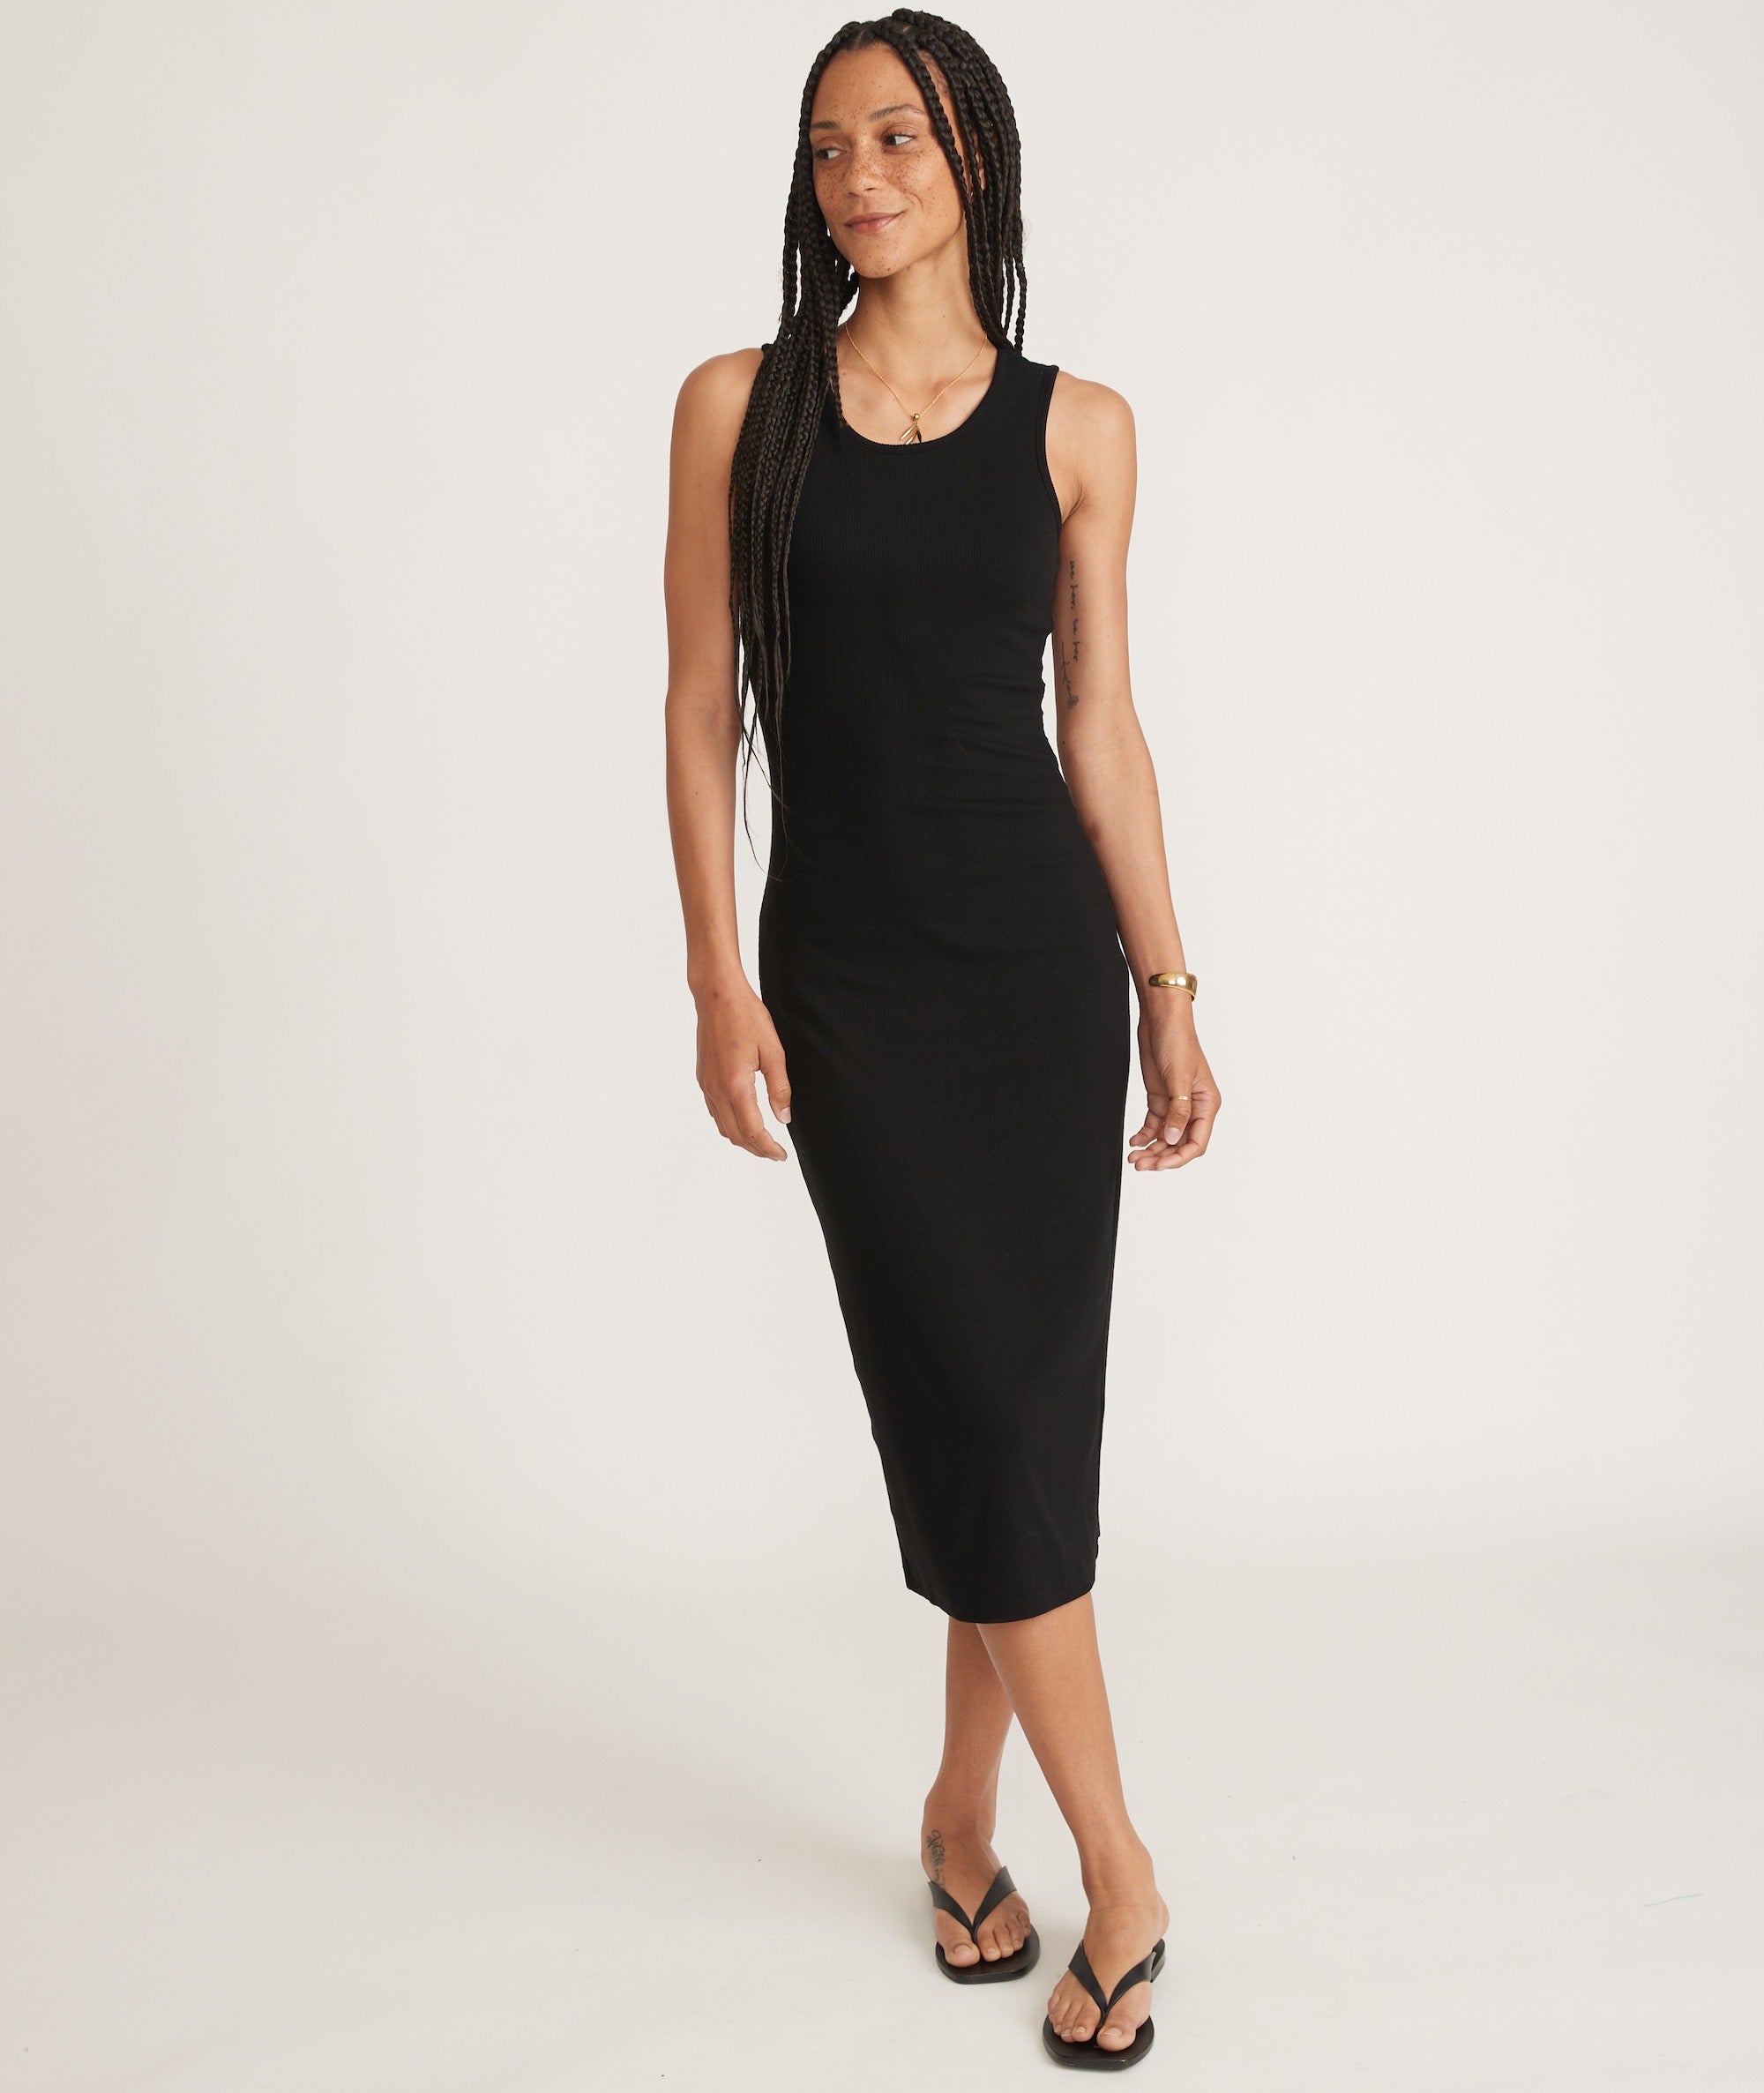 Finelylove Fitted Dress Summer Dresses A-line Knee Length Short Sleeve  Solid Black XXL - Walmart.com